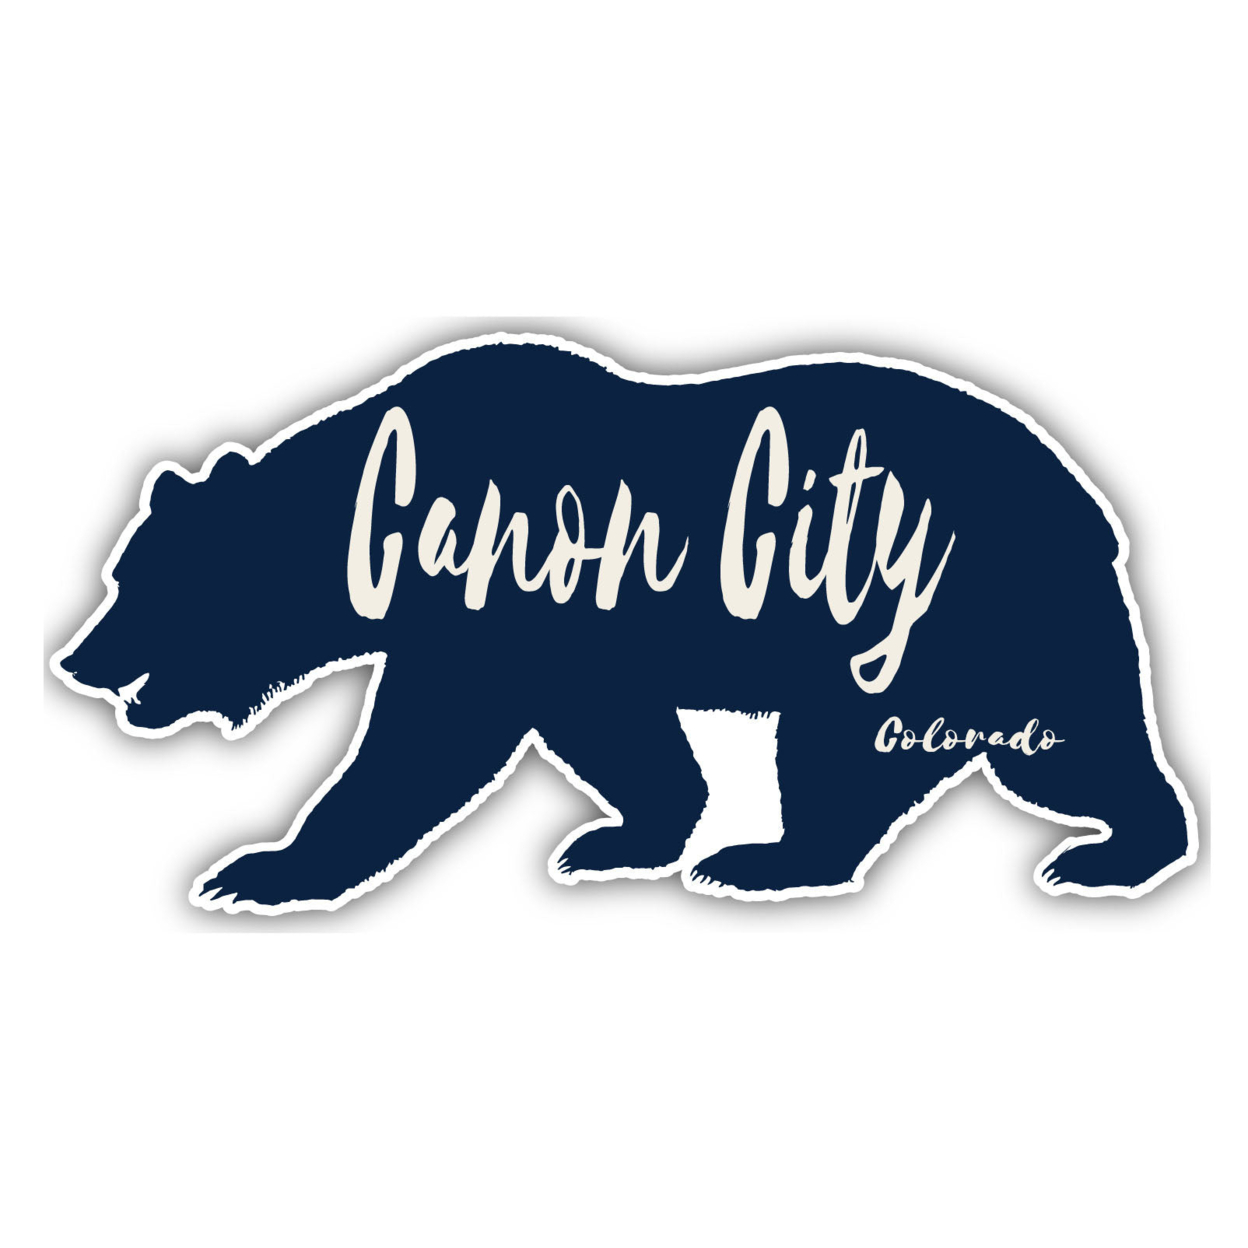 Canon City Colorado Souvenir Decorative Stickers (Choose Theme And Size) - Single Unit, 2-Inch, Camp Life